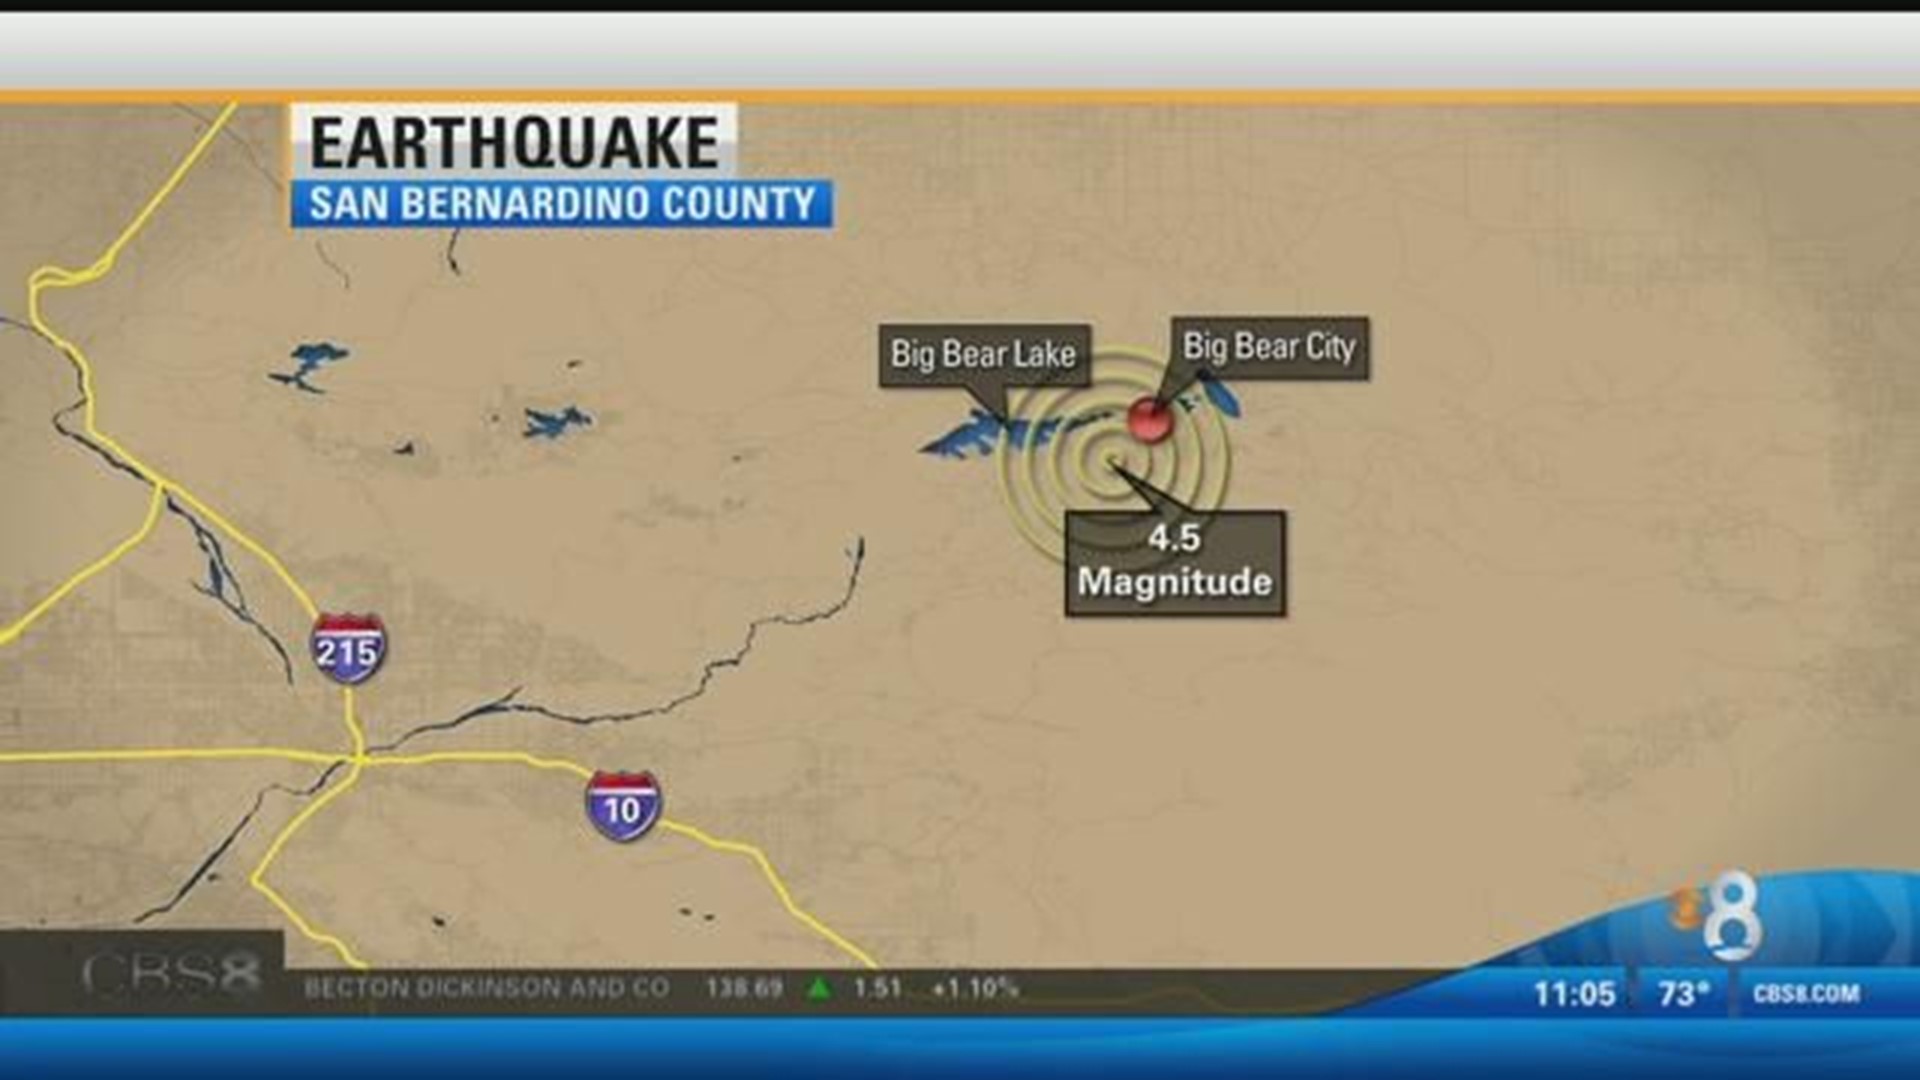 Earthquake hits Big Bear area